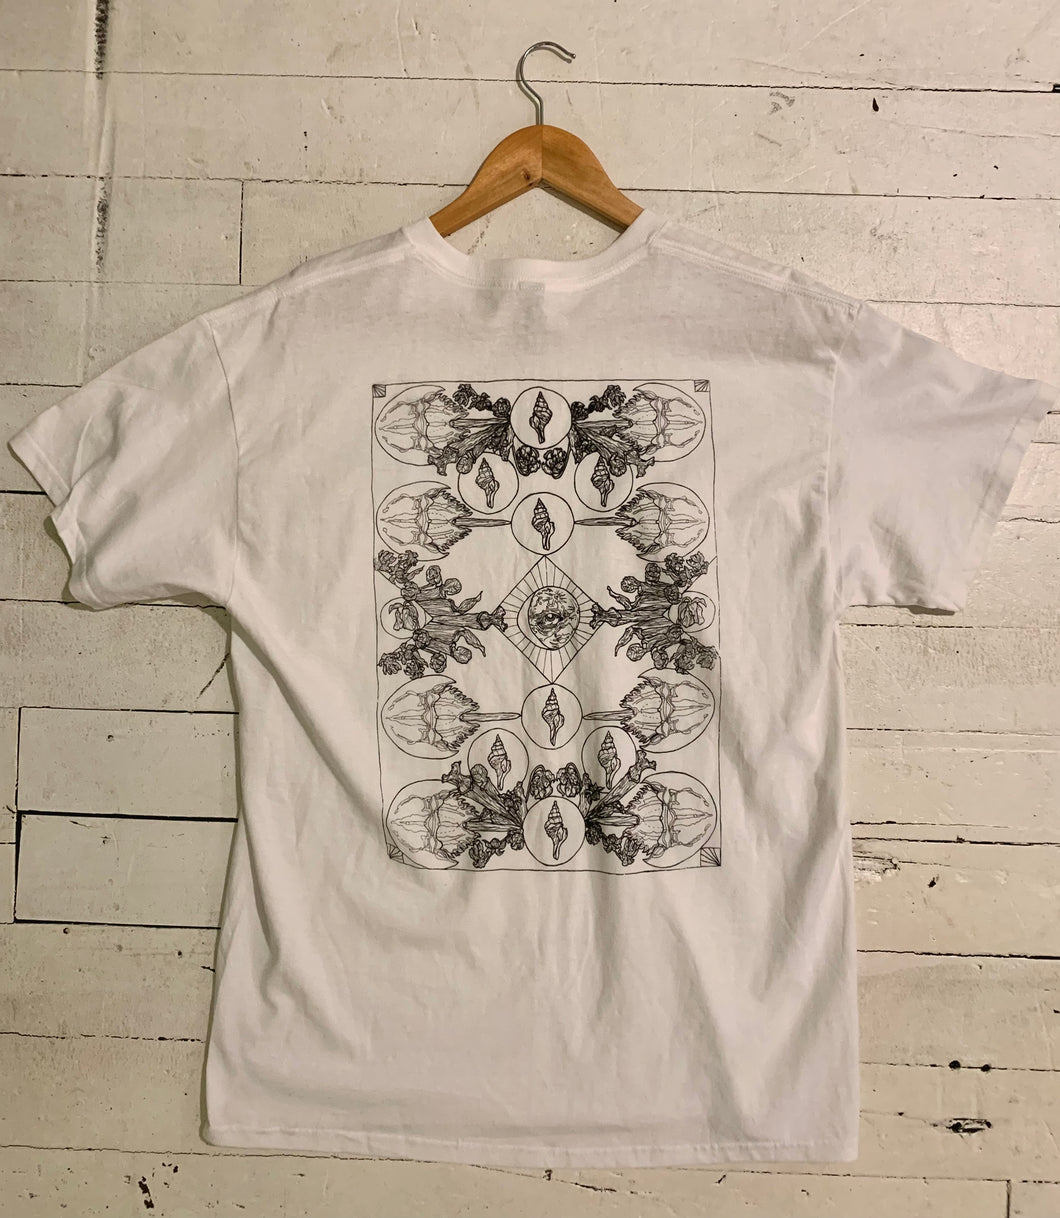 8 of Shells t-shirt by Tropical Goth Prints